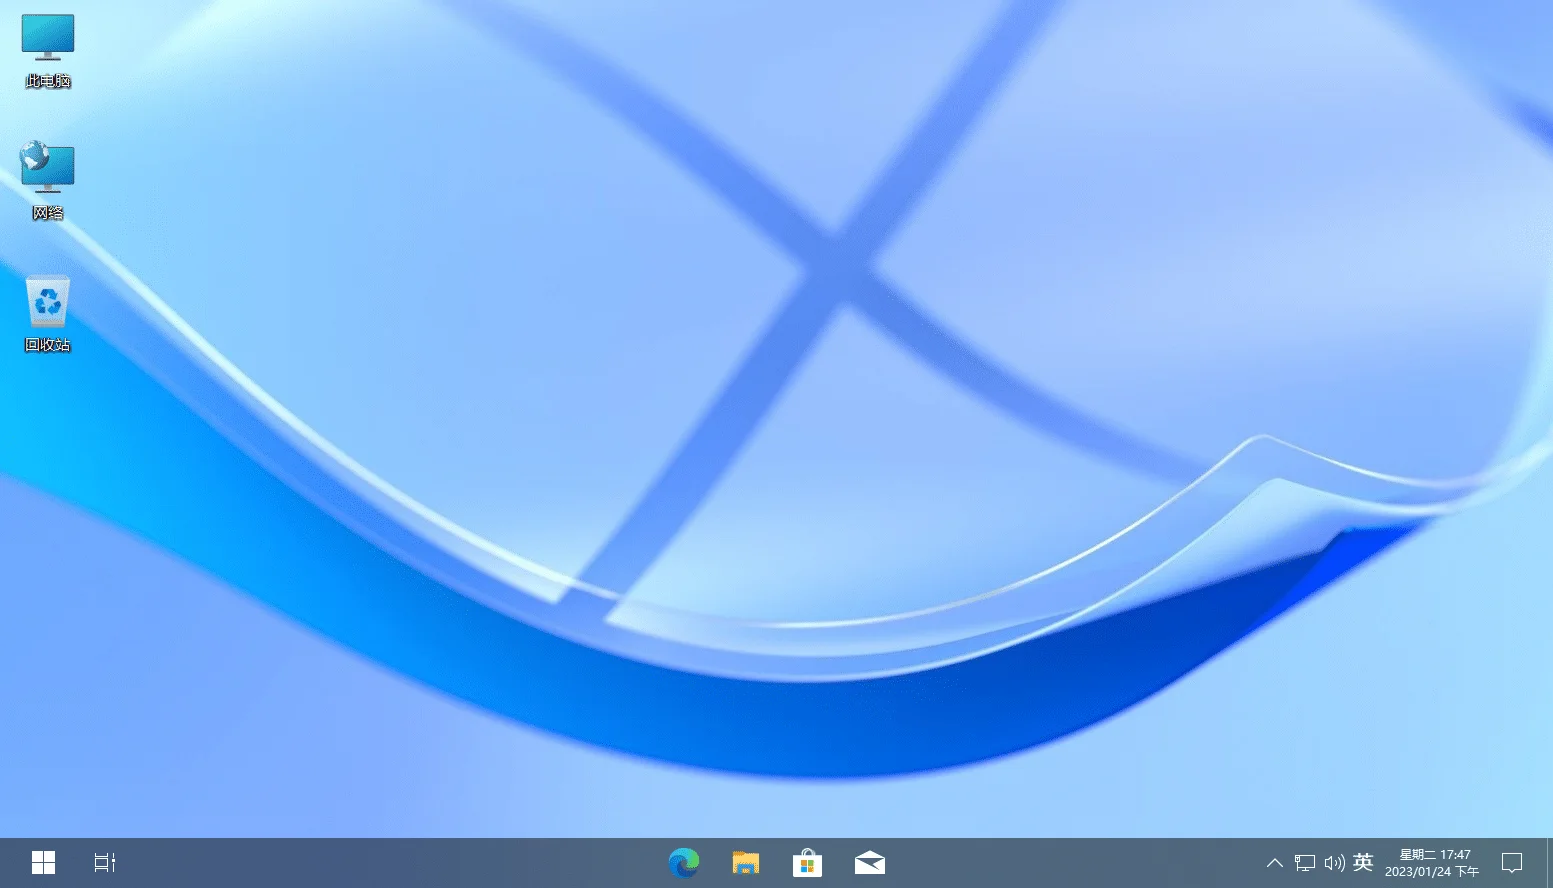 【SYZ】Windows10 22H2 v19045.2546 美化修复正式版 - 果核剥壳